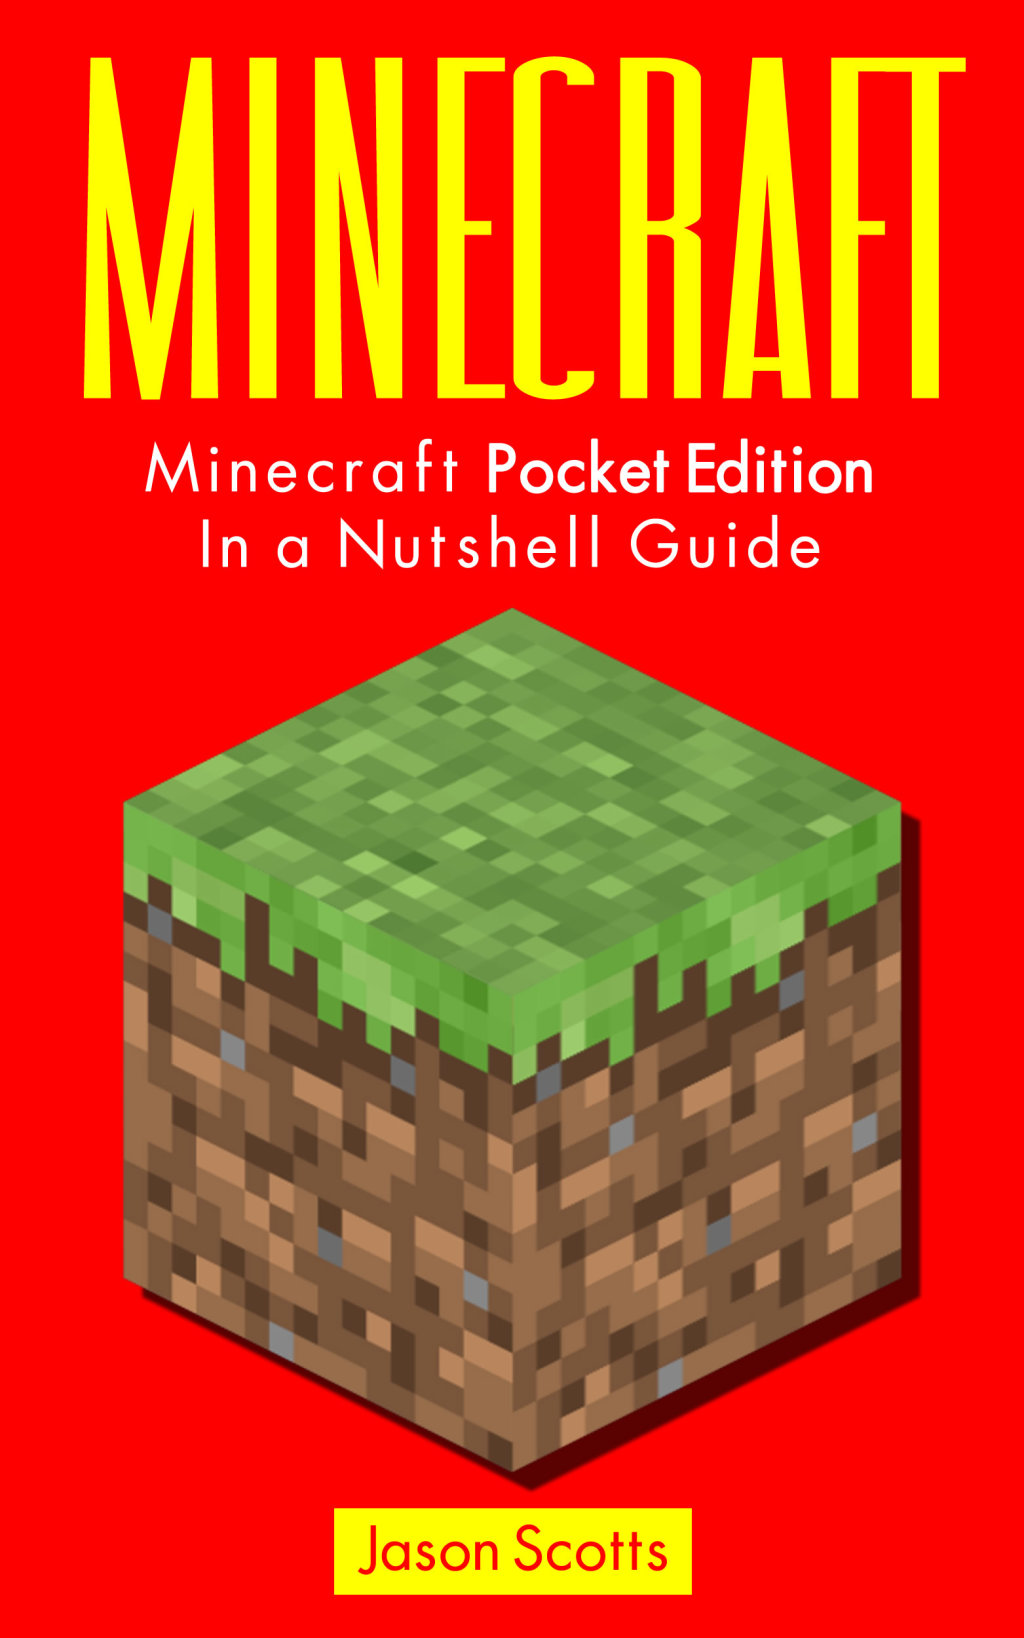 Minecraft: Minecraft Pocket Edition In a Nutshell Guide (eBook) - Jason Scotts